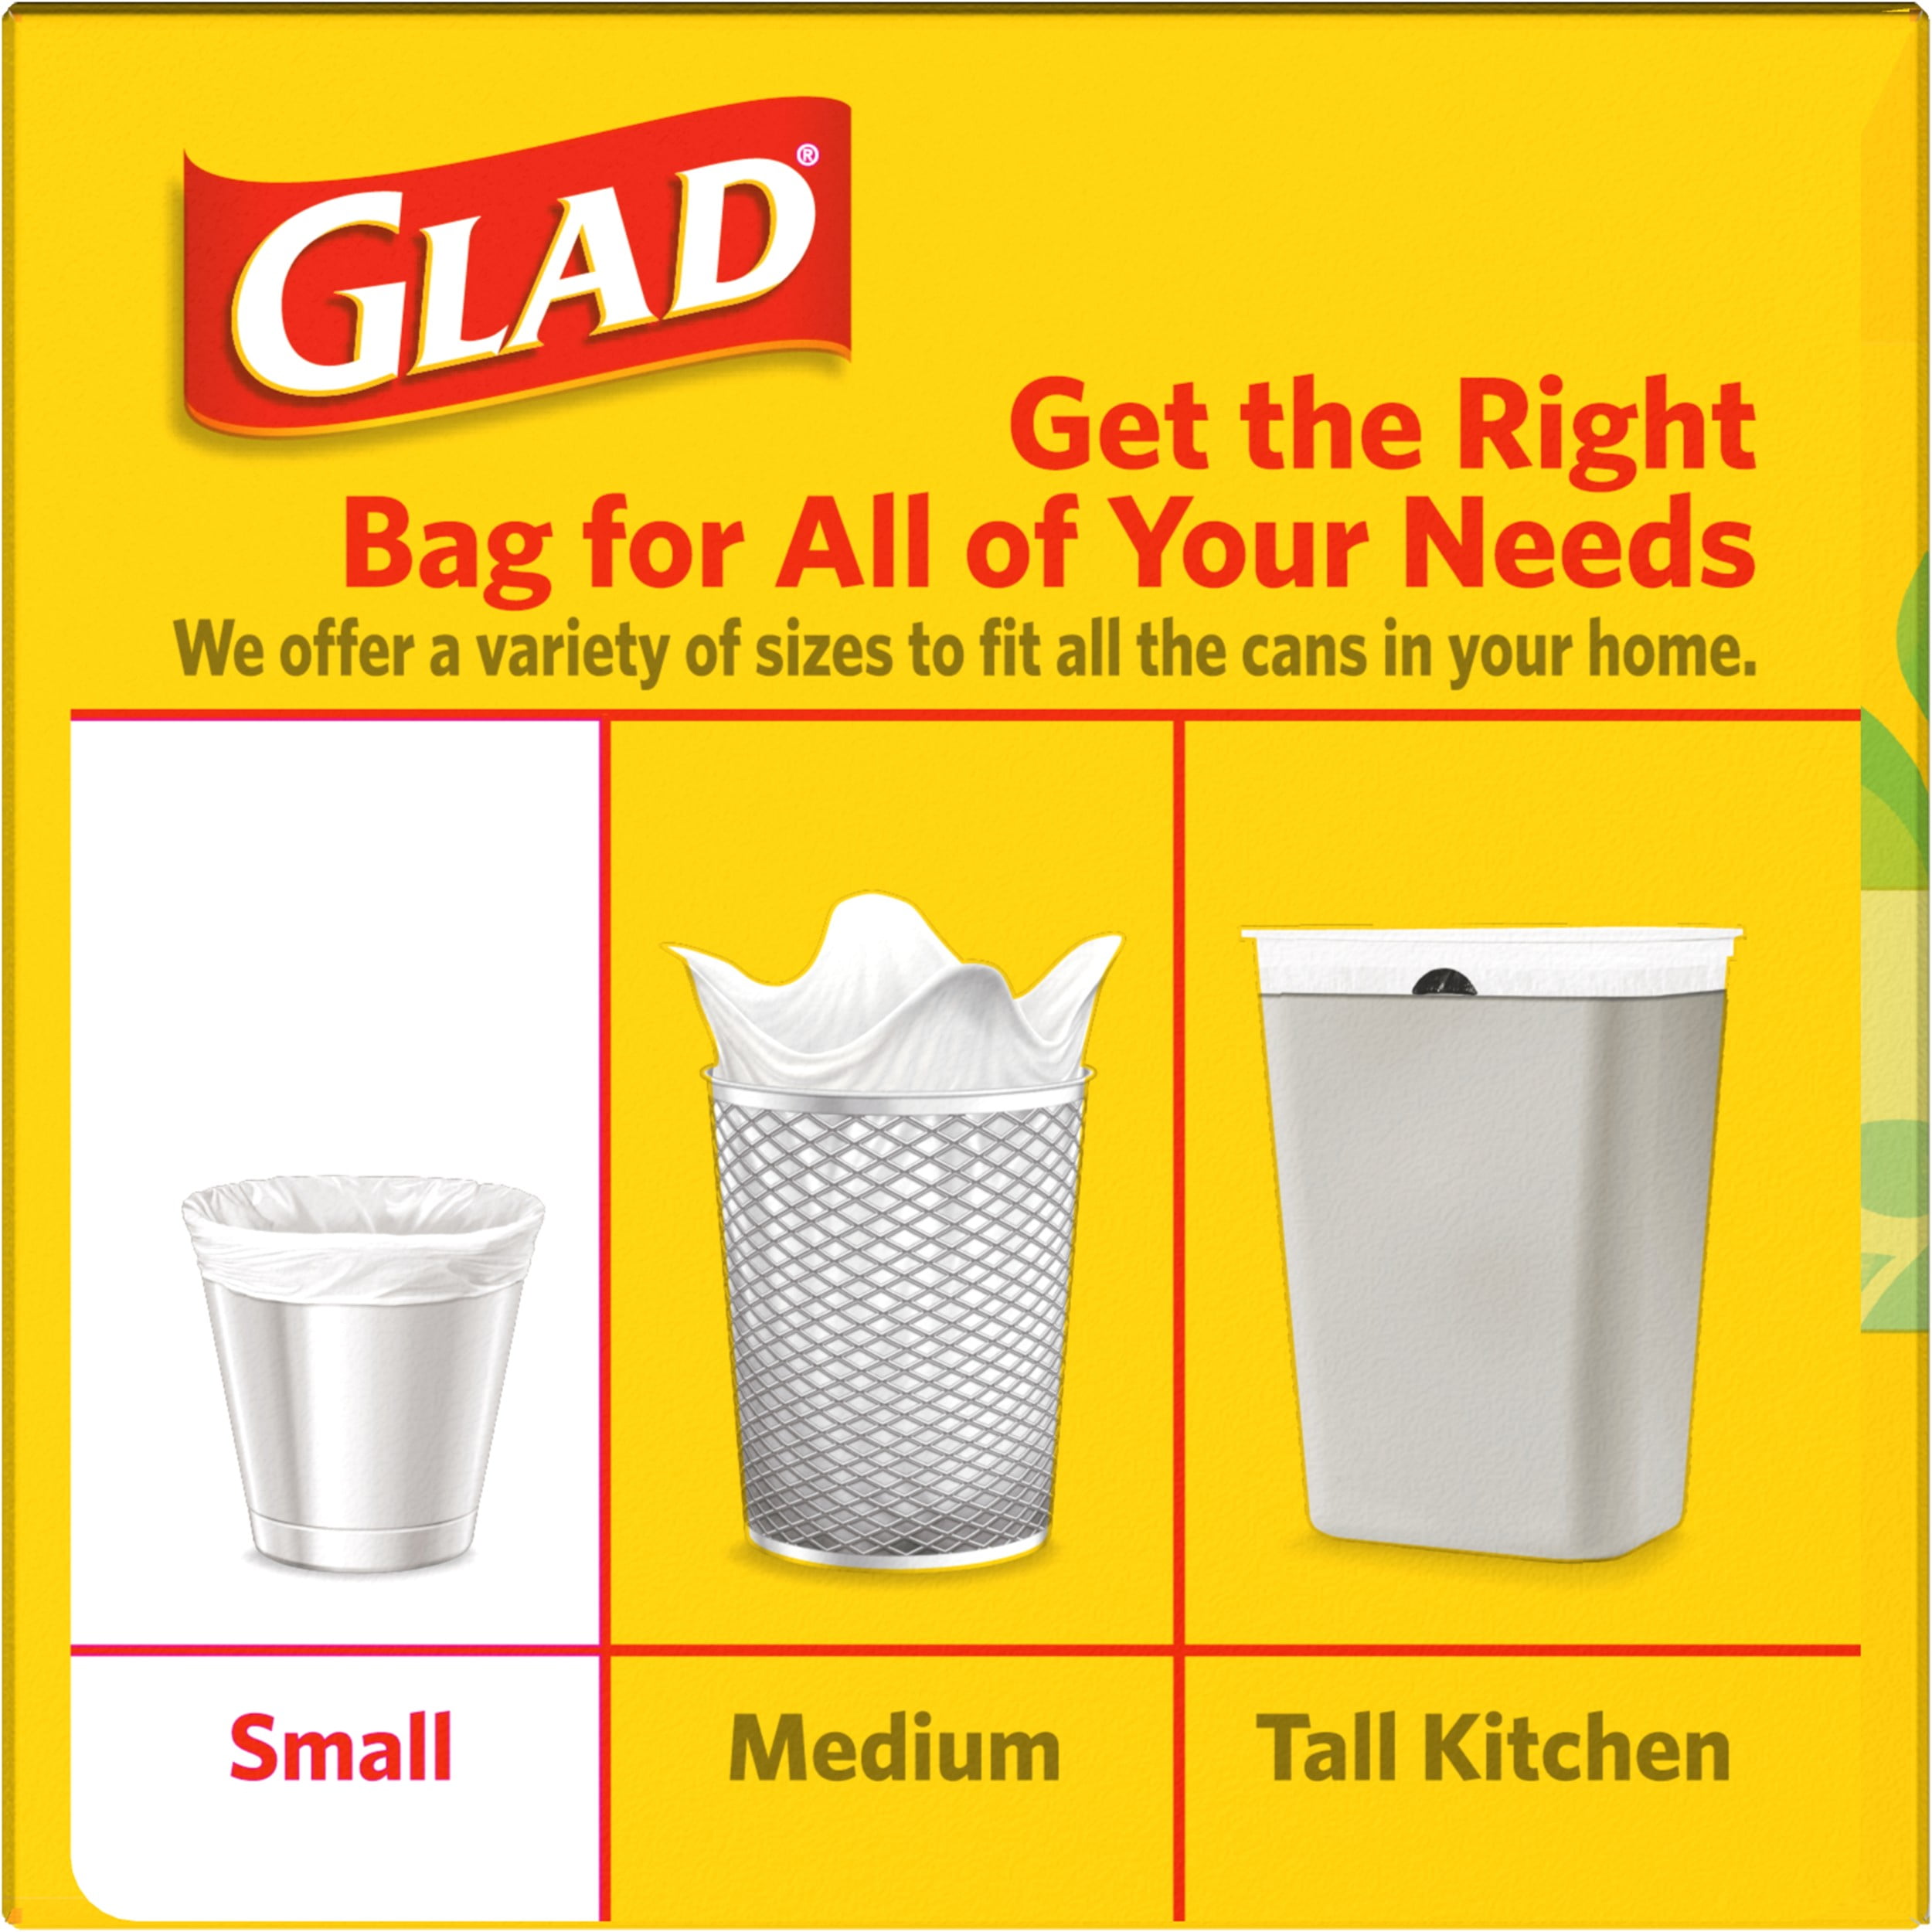 Glad OdorShield 4 Gallon Kitchen Trash Bags,Fresh Clean, 26/Box (78812)